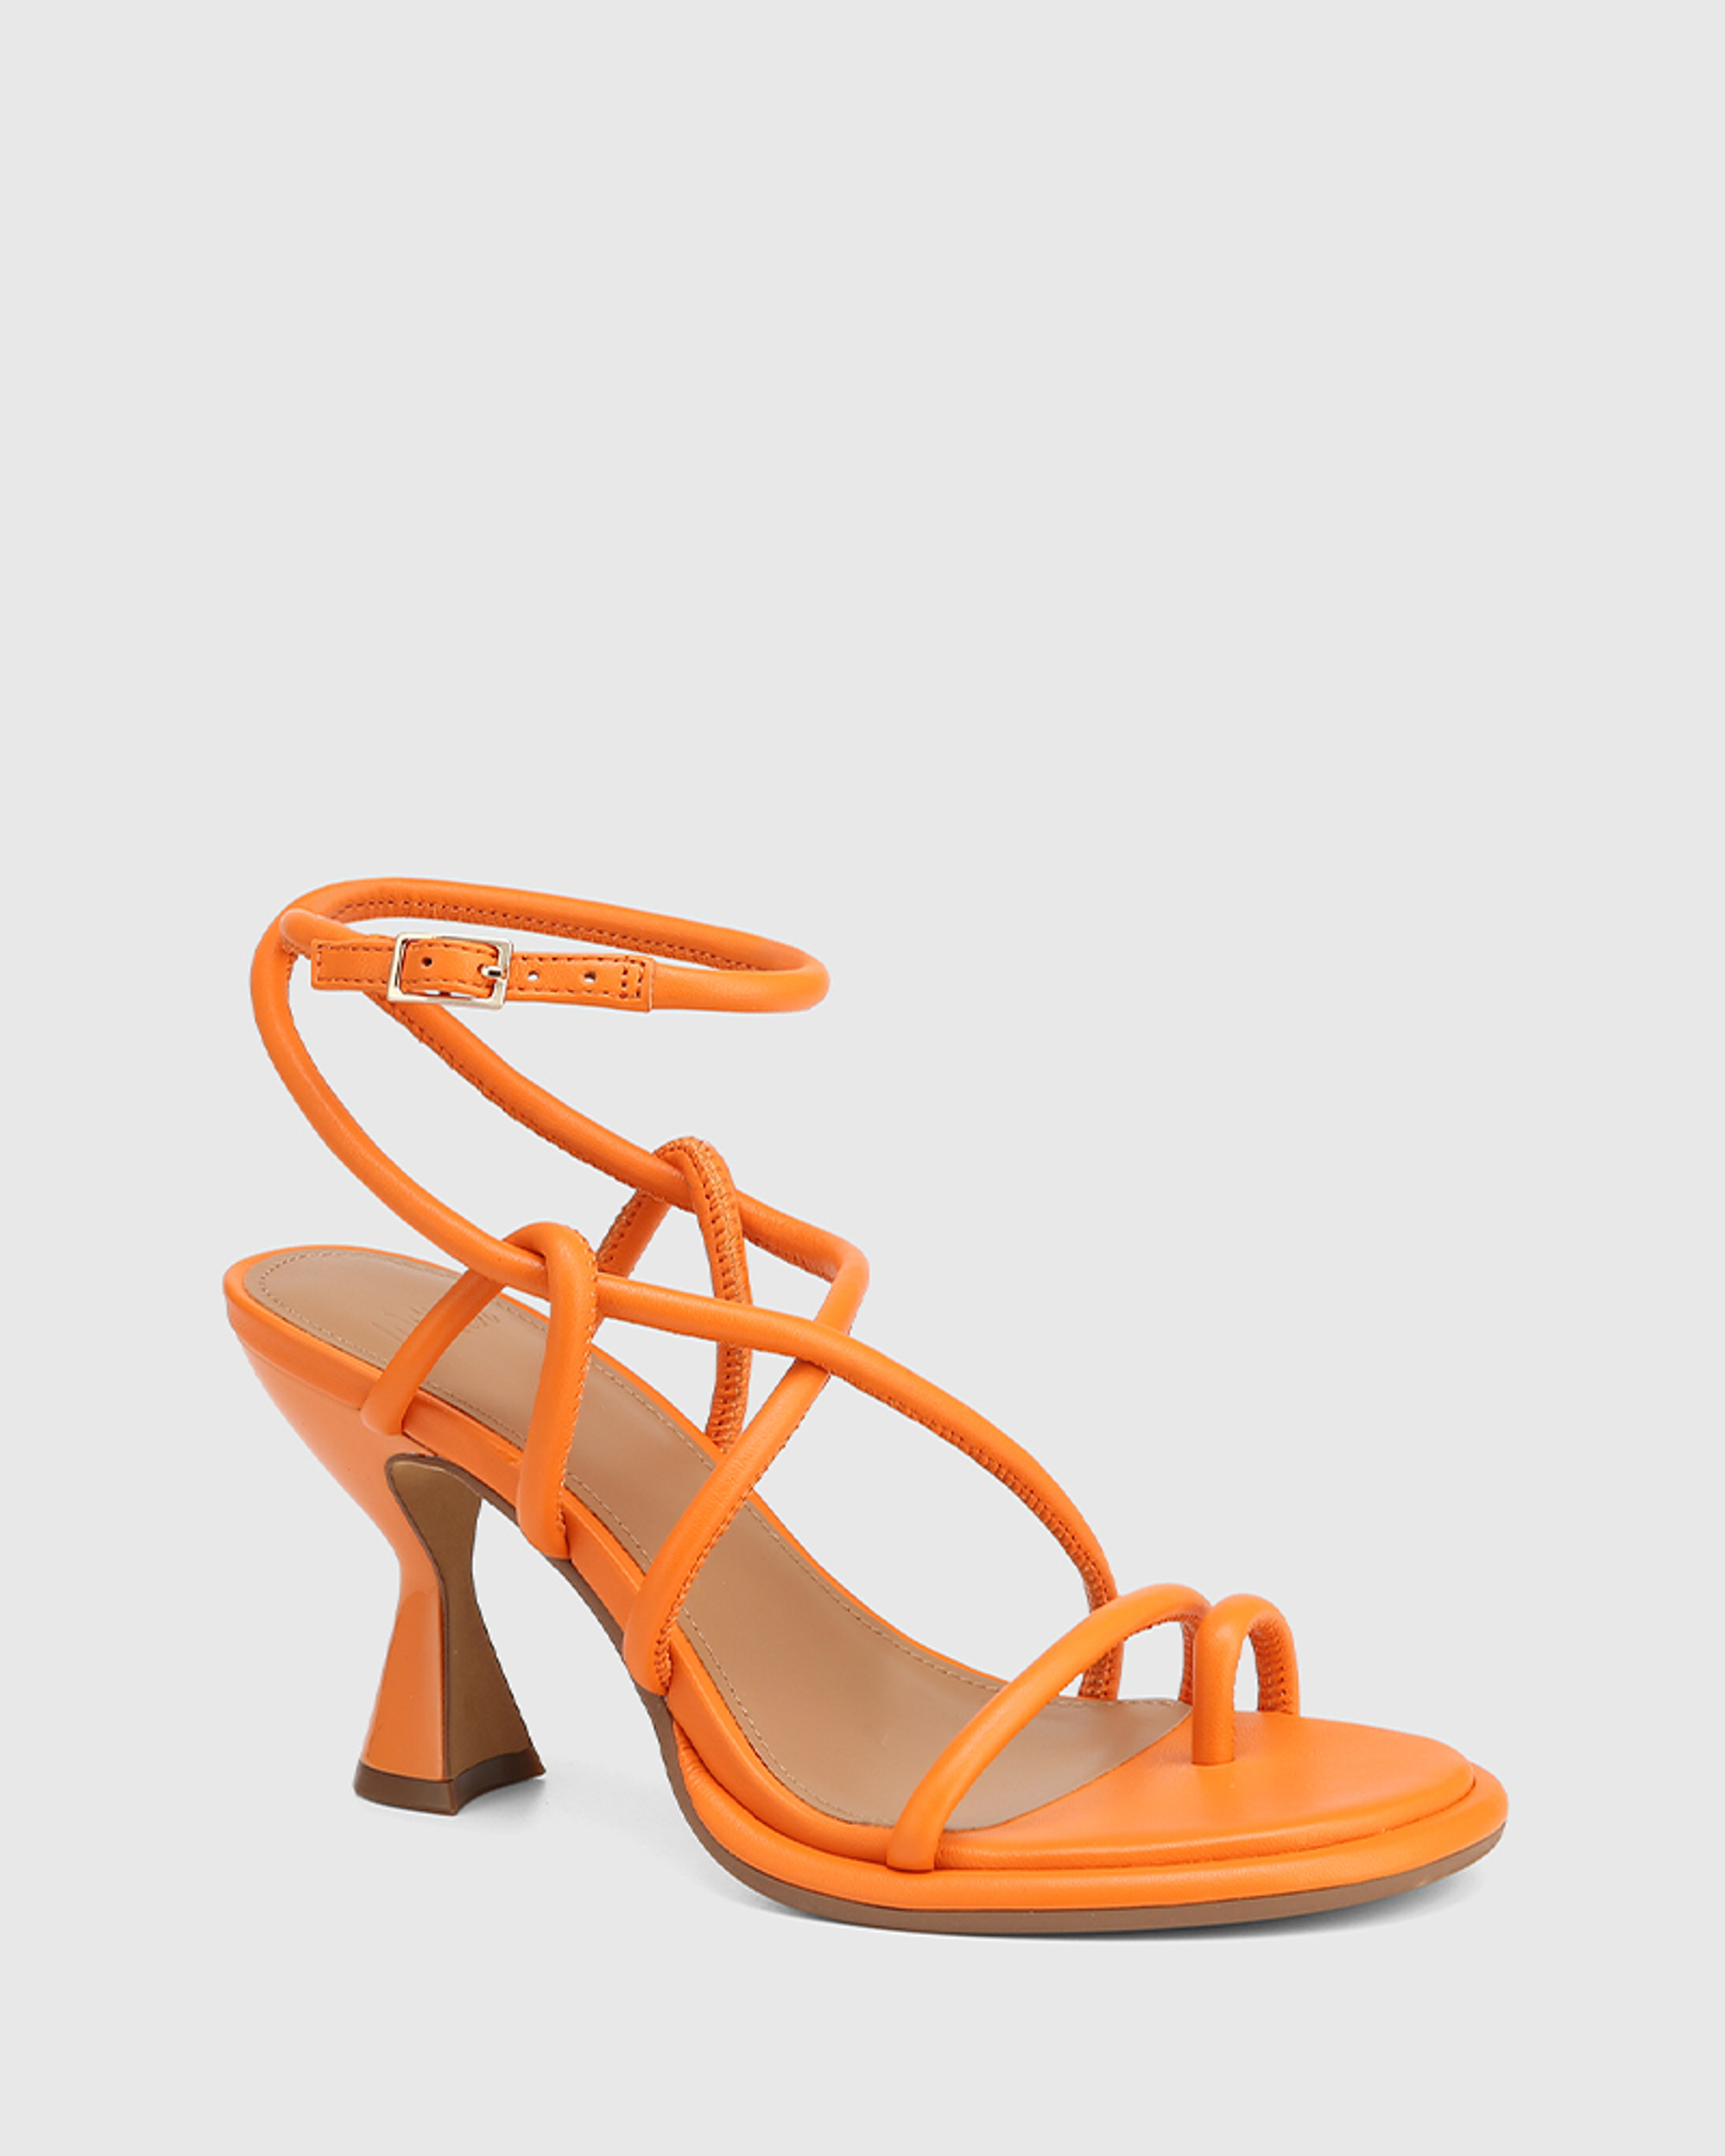 Square toe strappy sandals | Buy women heel sandals online in Lagos